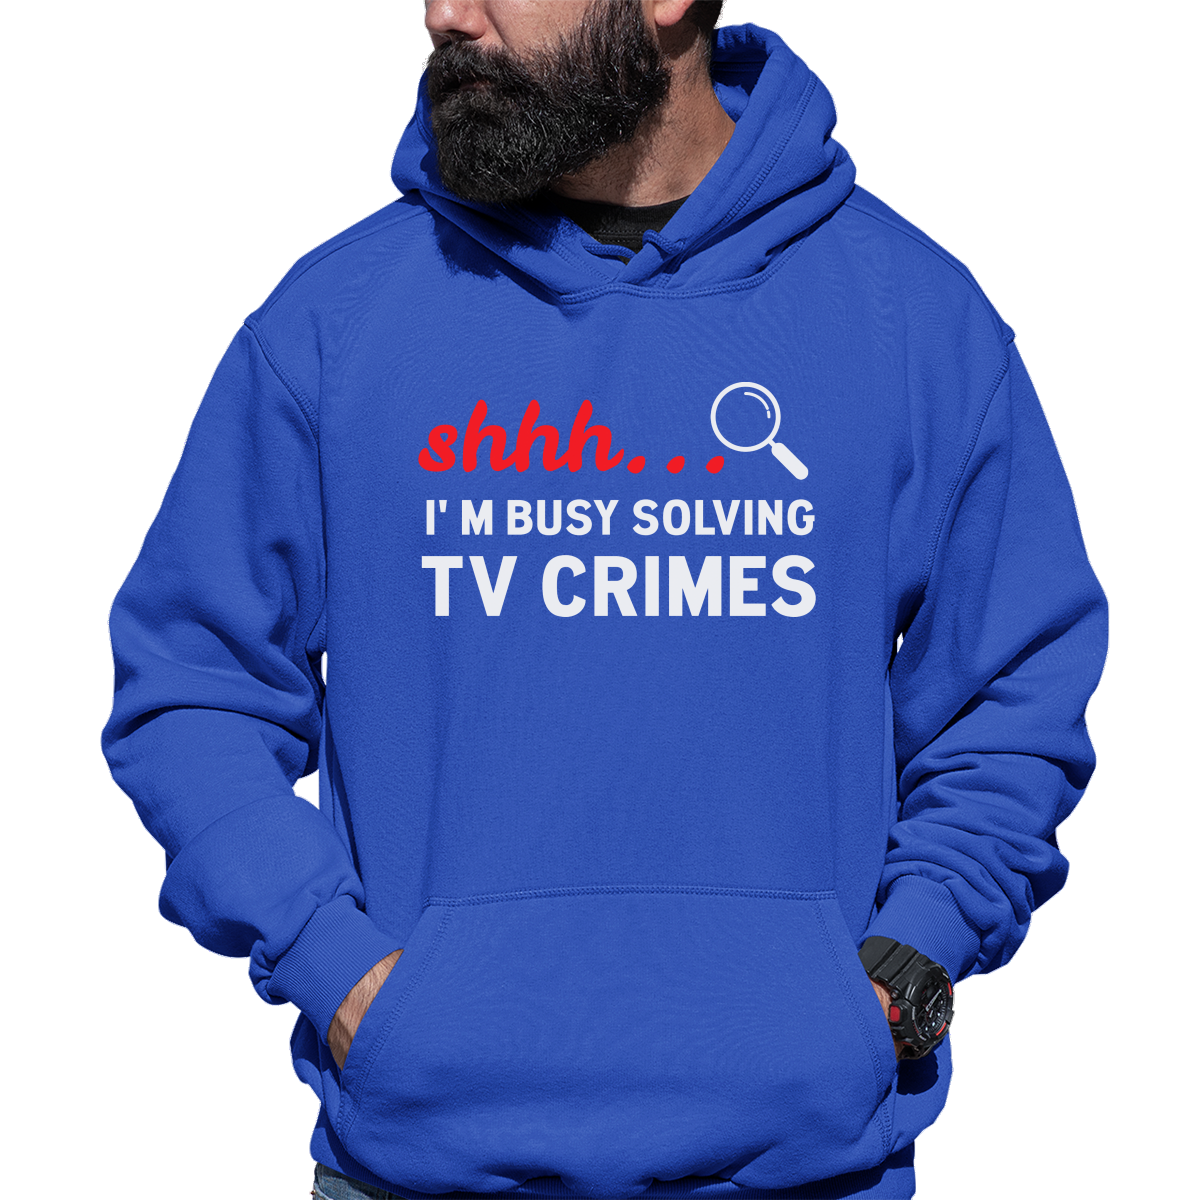 Shh I'm Busy Solving TV Crimes Unisex Hoodie | Blue